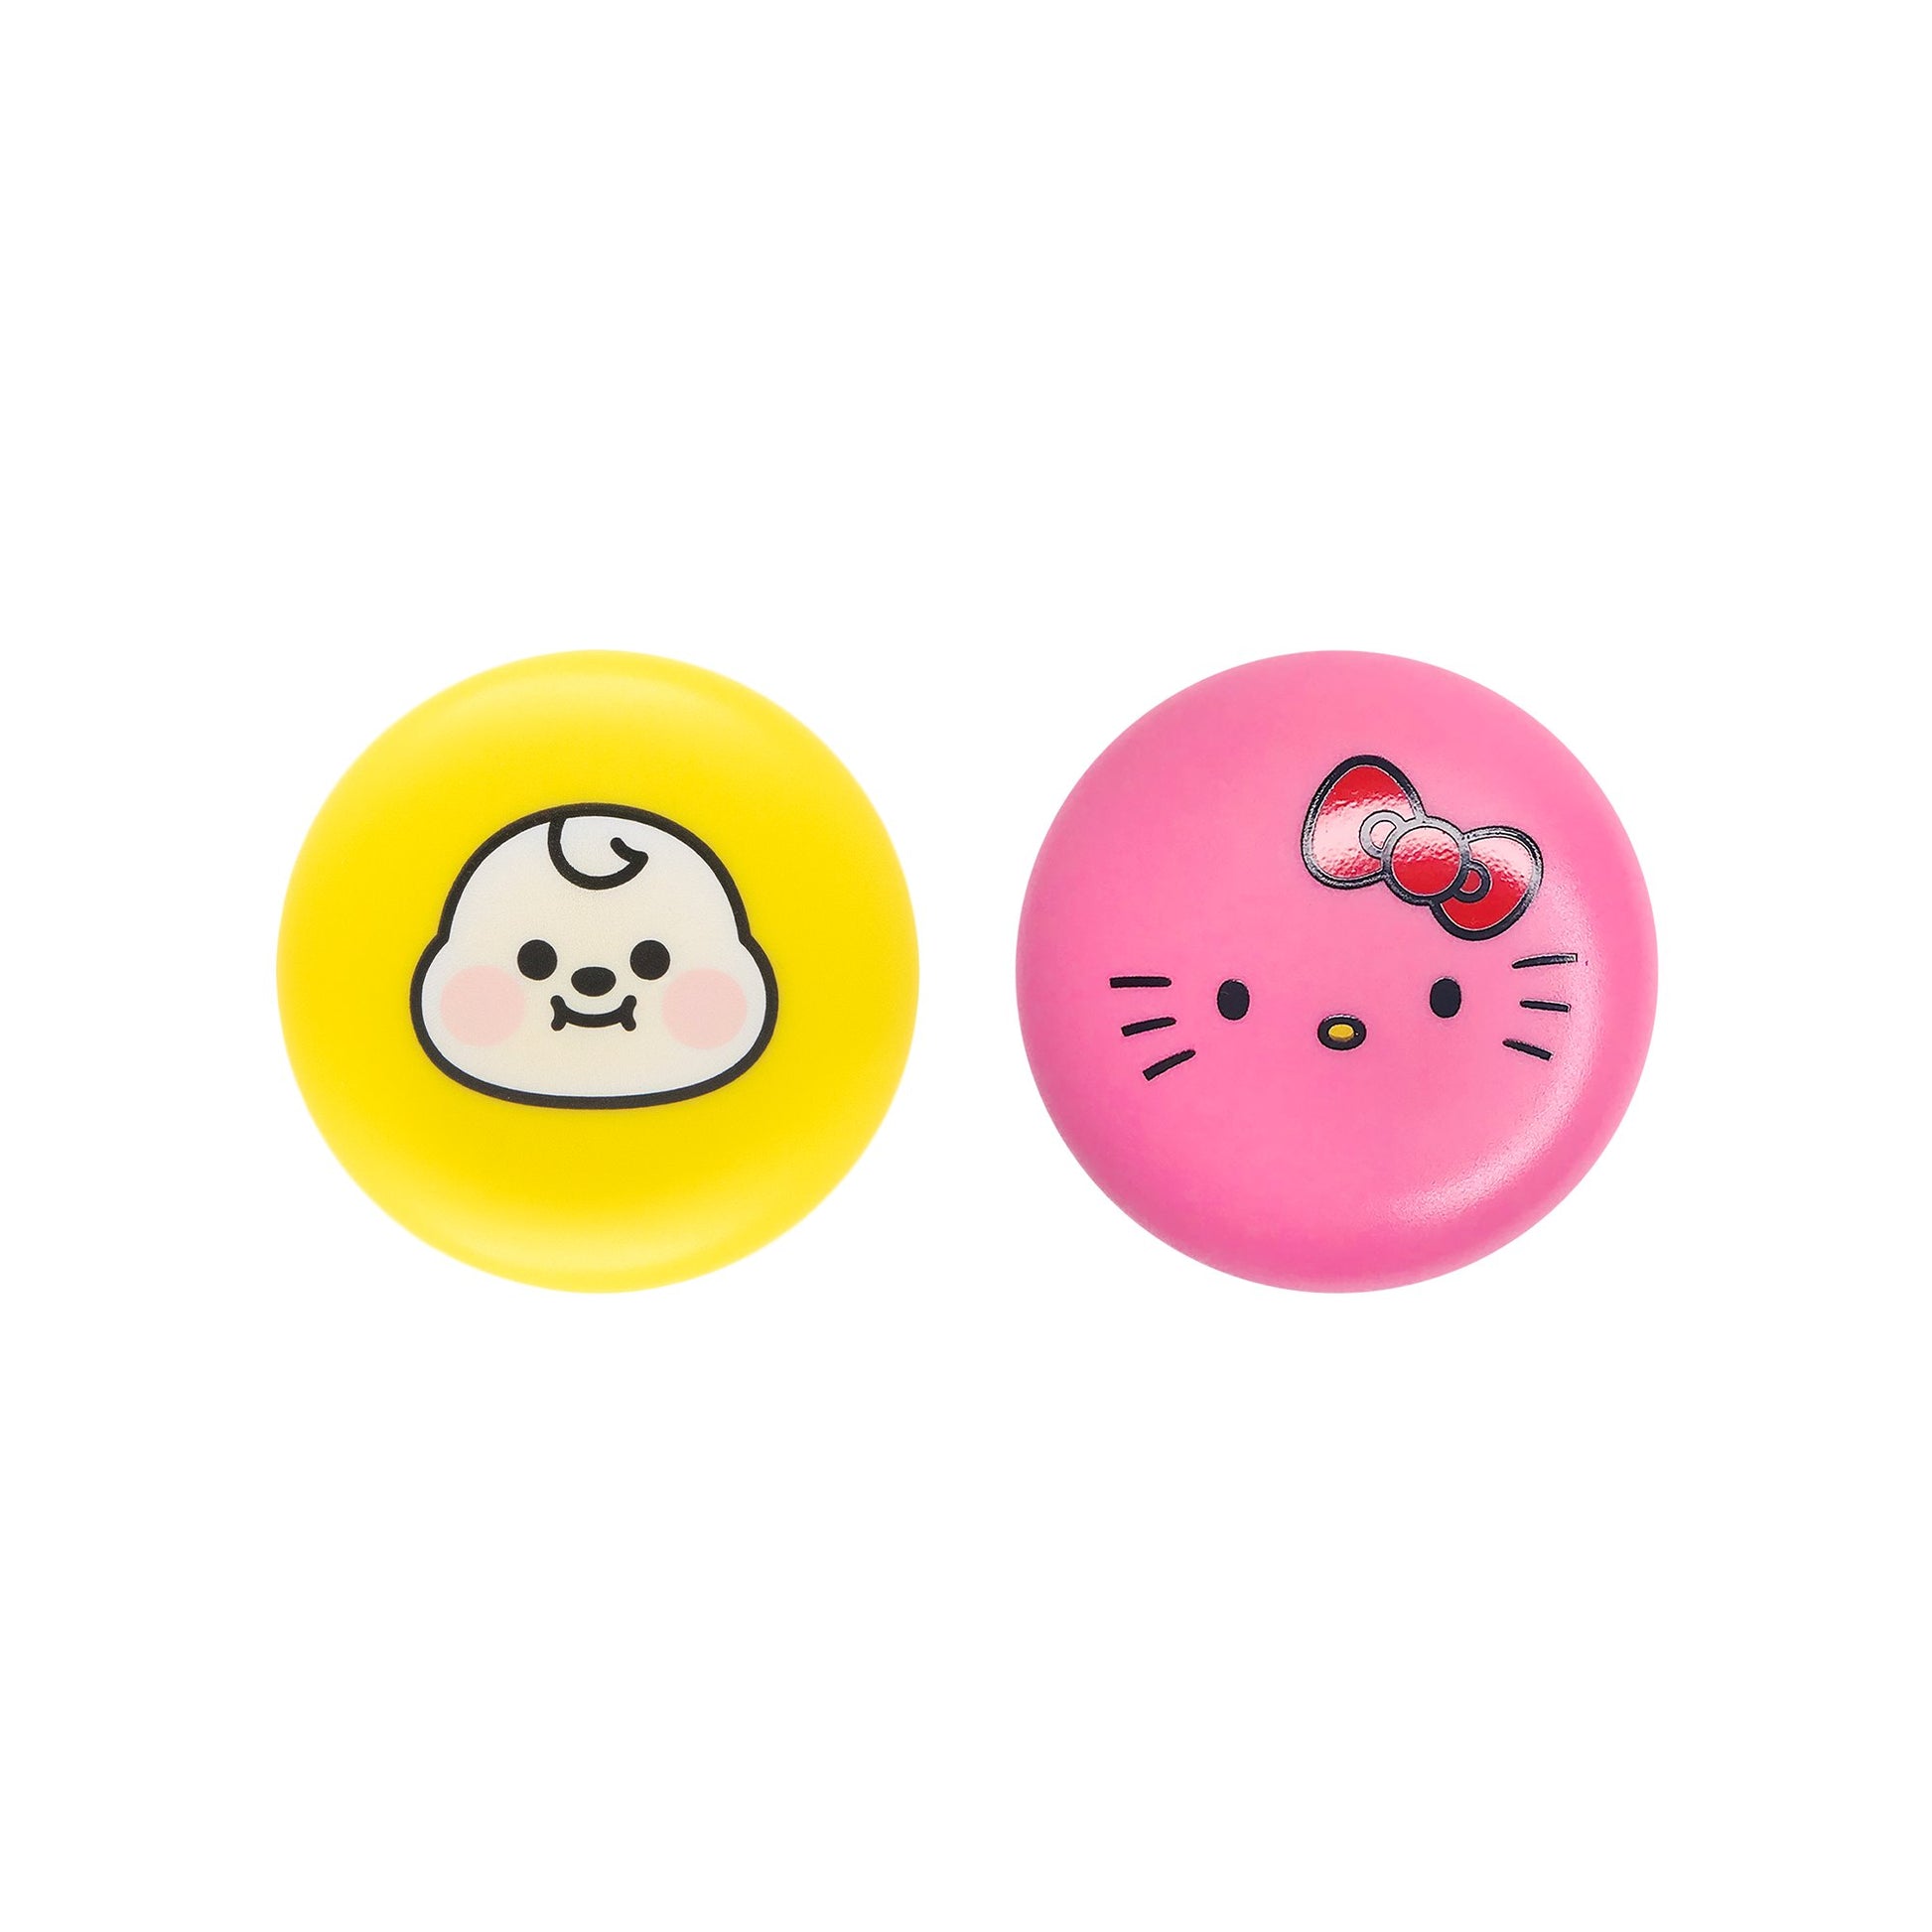 Hello Kitty & BT21 CHIMMY Moisturizing Macaron Lip Balm Duo with Vitamin E and Shea Butter, $18